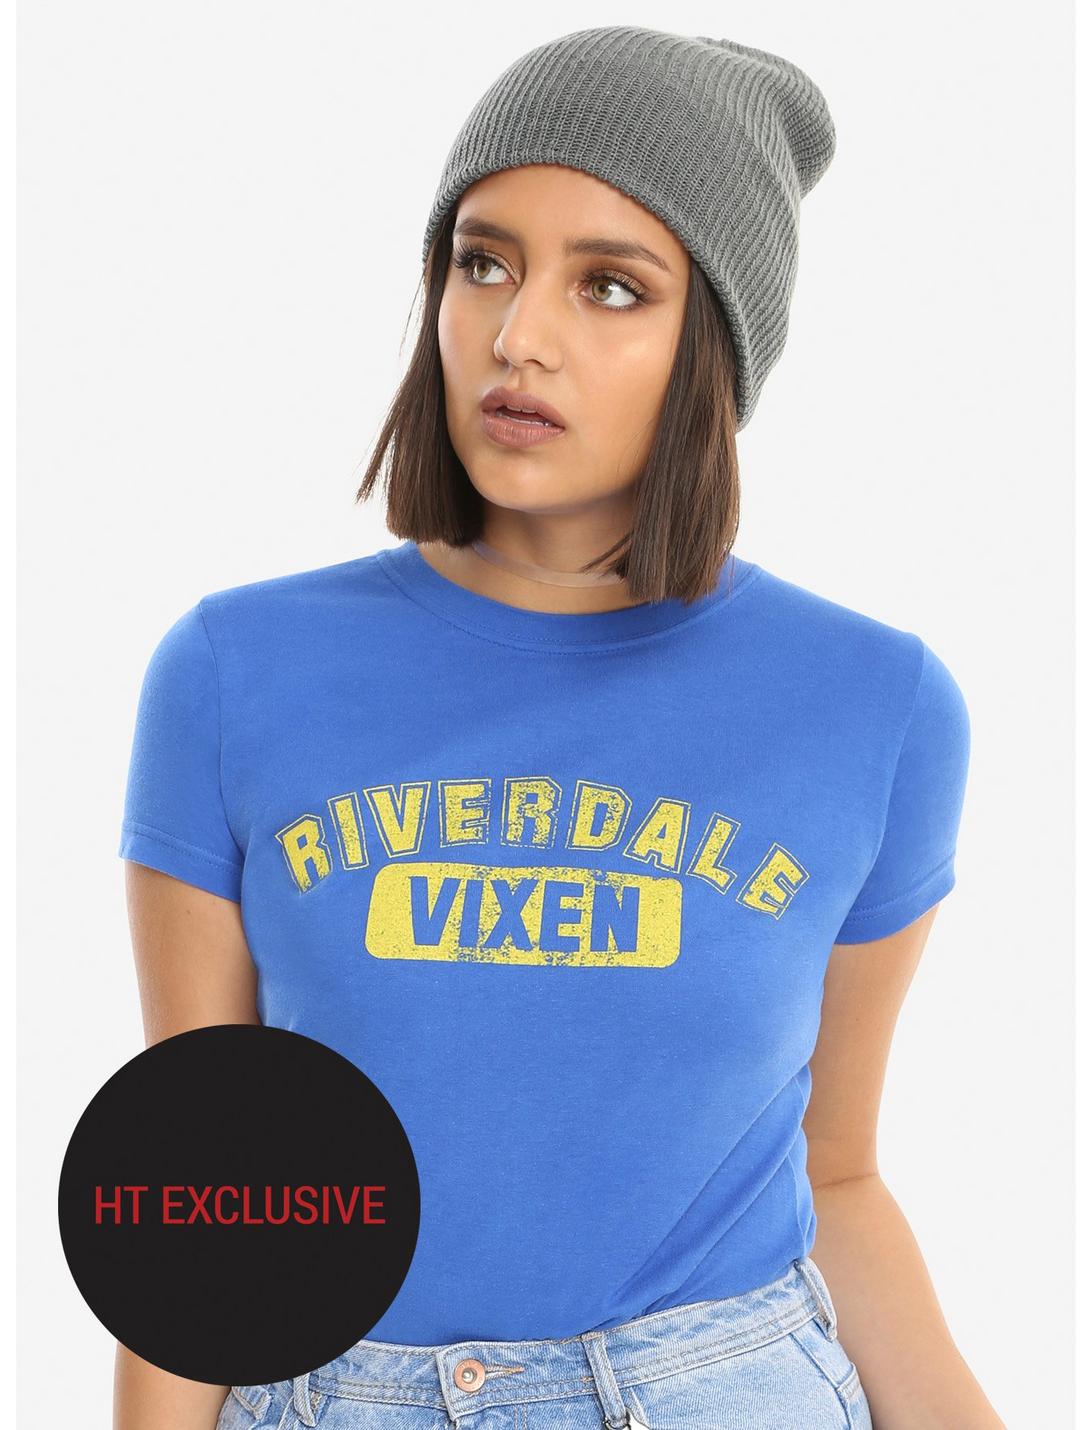 Riverdale Vixen Cheer Girls T-Shirt Hot Topic Exclusive, BLACK, hi-res